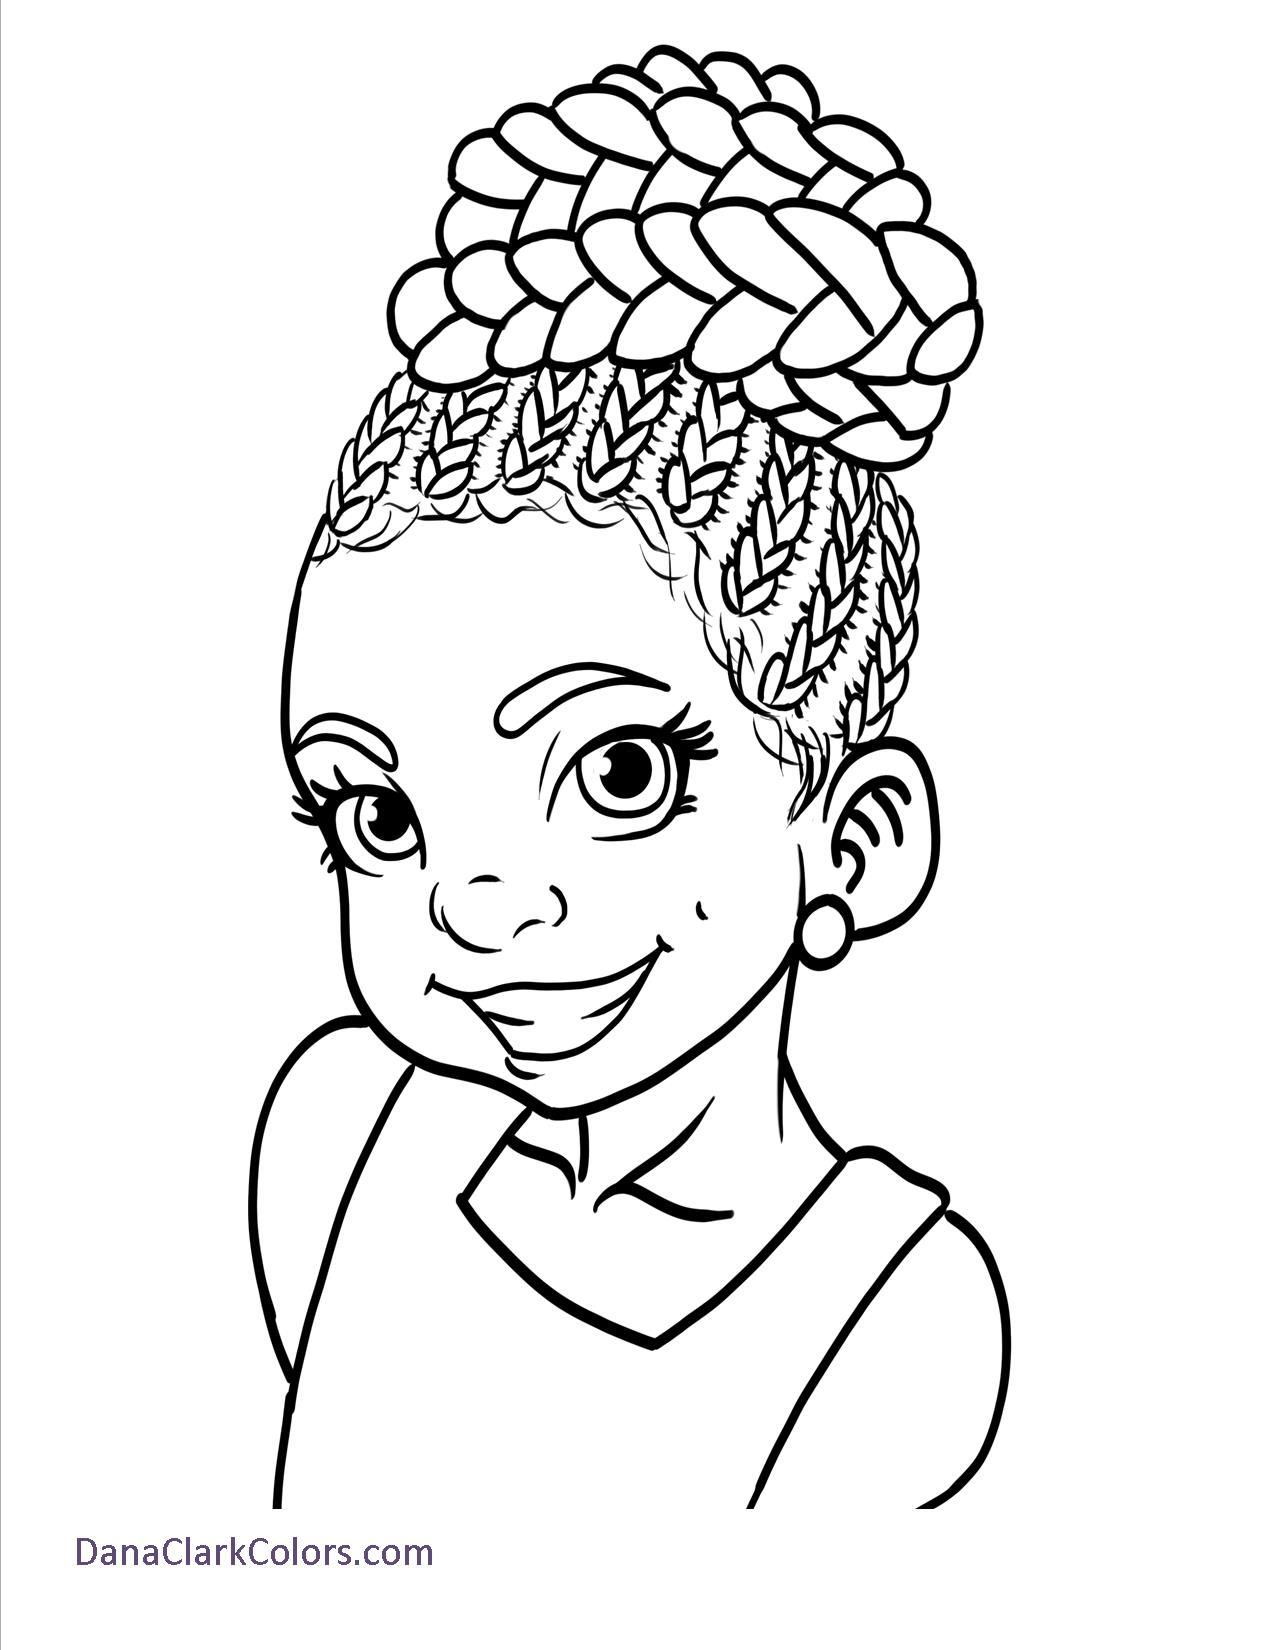 Free Coloring Pages - DanaClarkColors.com | Coloring pages for girls, Free coloring  pictures, Princess coloring pages